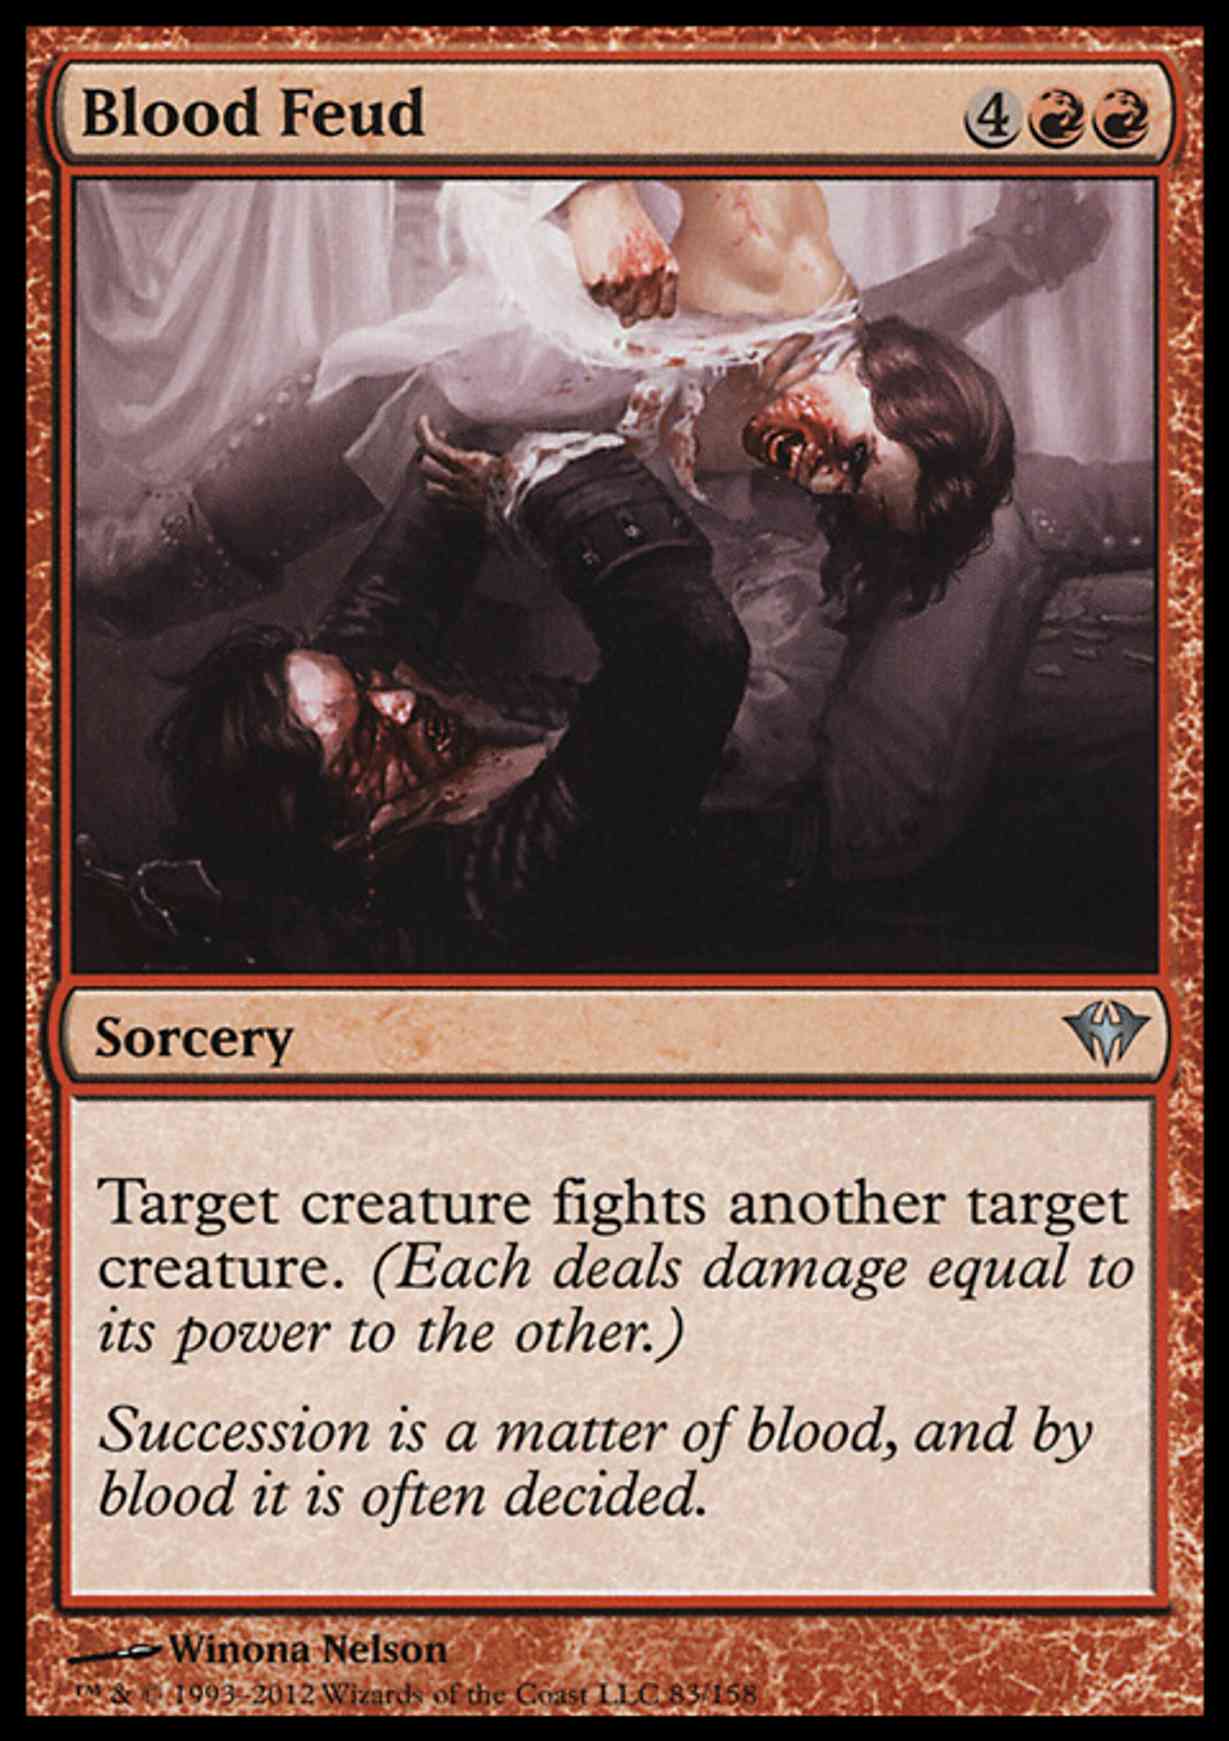 Blood Feud magic card front